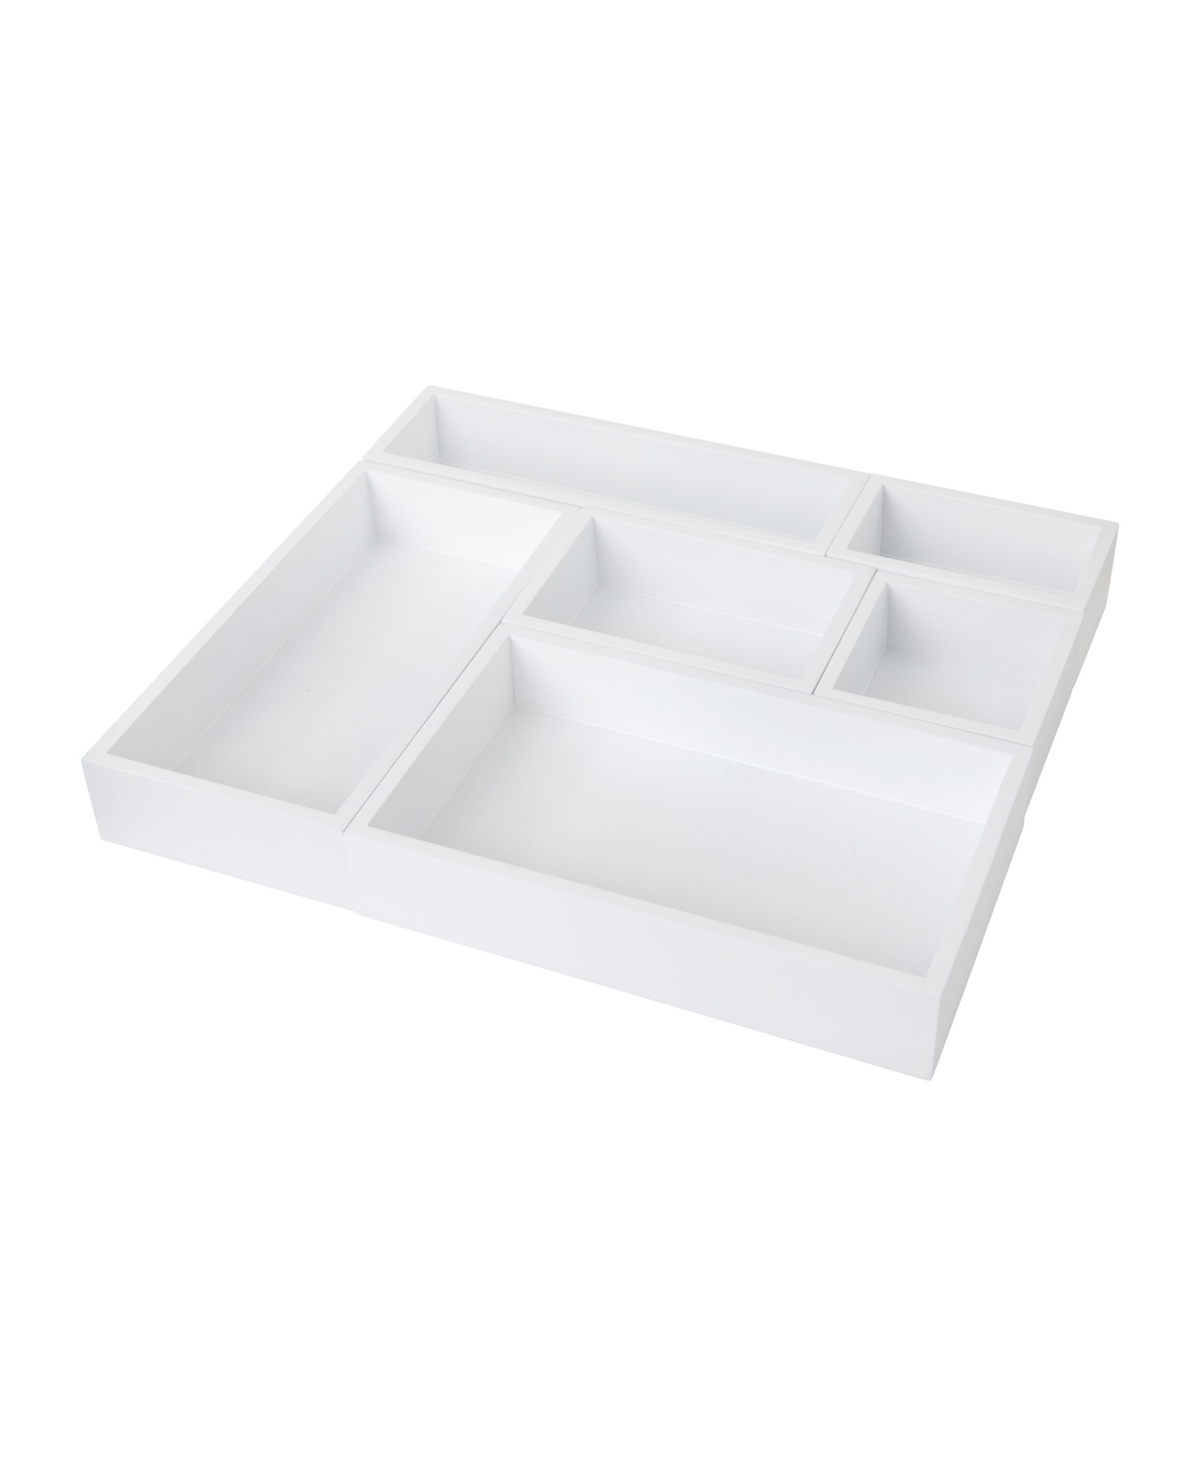 Enzo 6 Compartments Wooden Desk Drawer Organizer - White